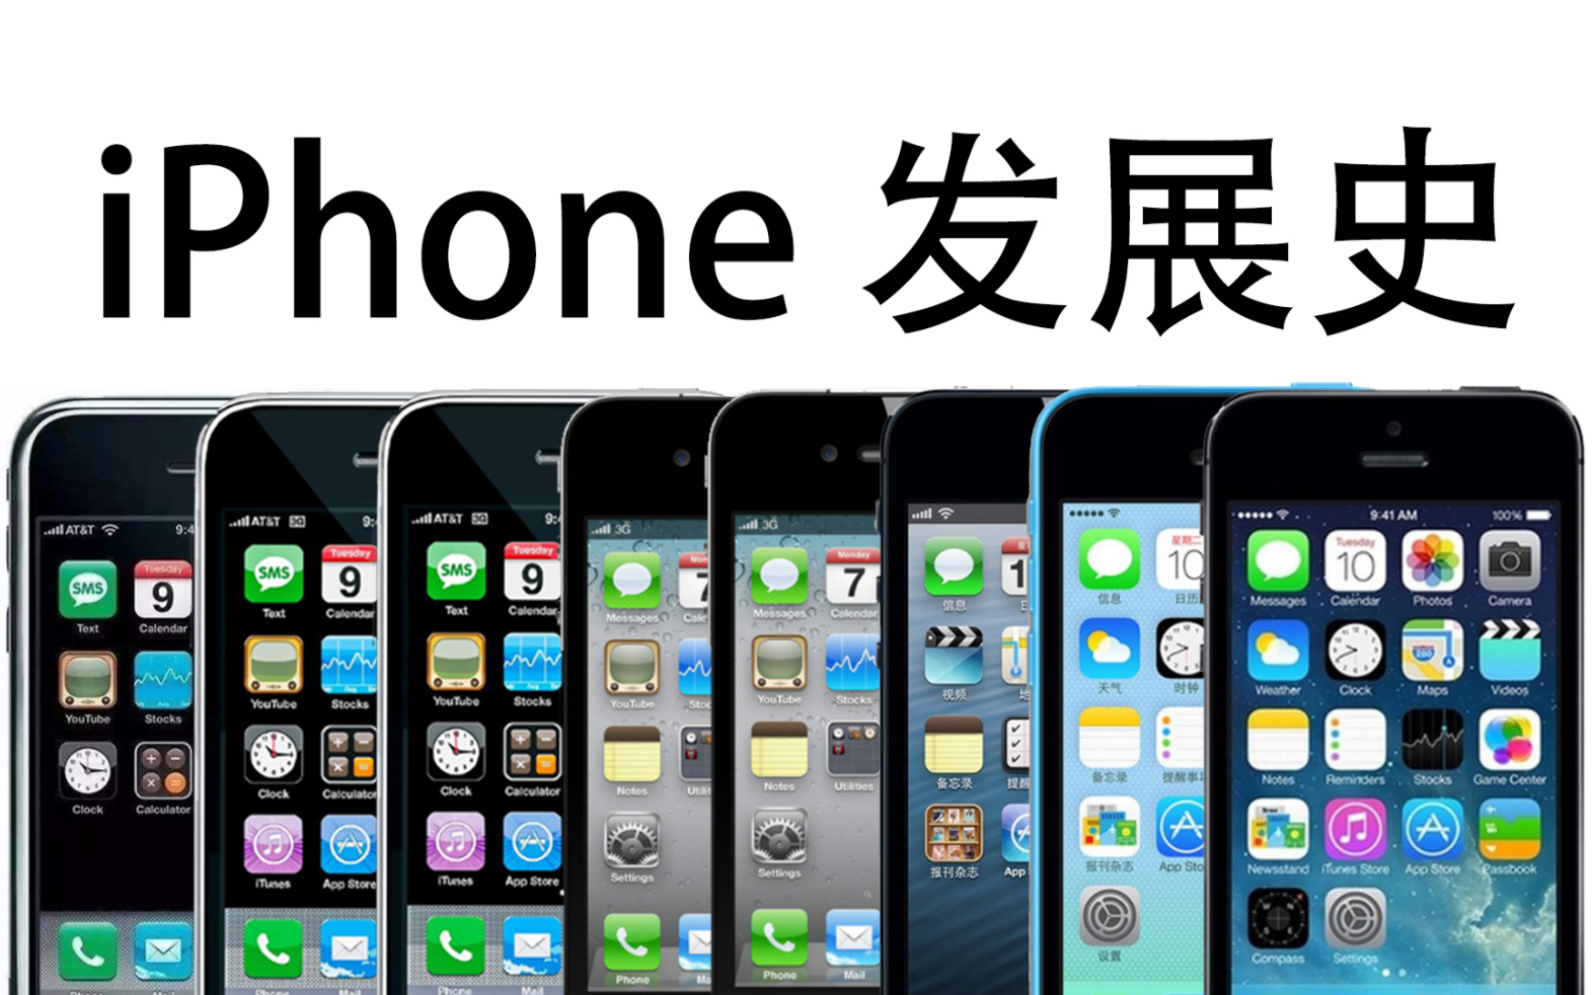 【Apple】iPhone 简史 - 3分钟了解 iPhone 发展史_哔哩哔哩_bilibili